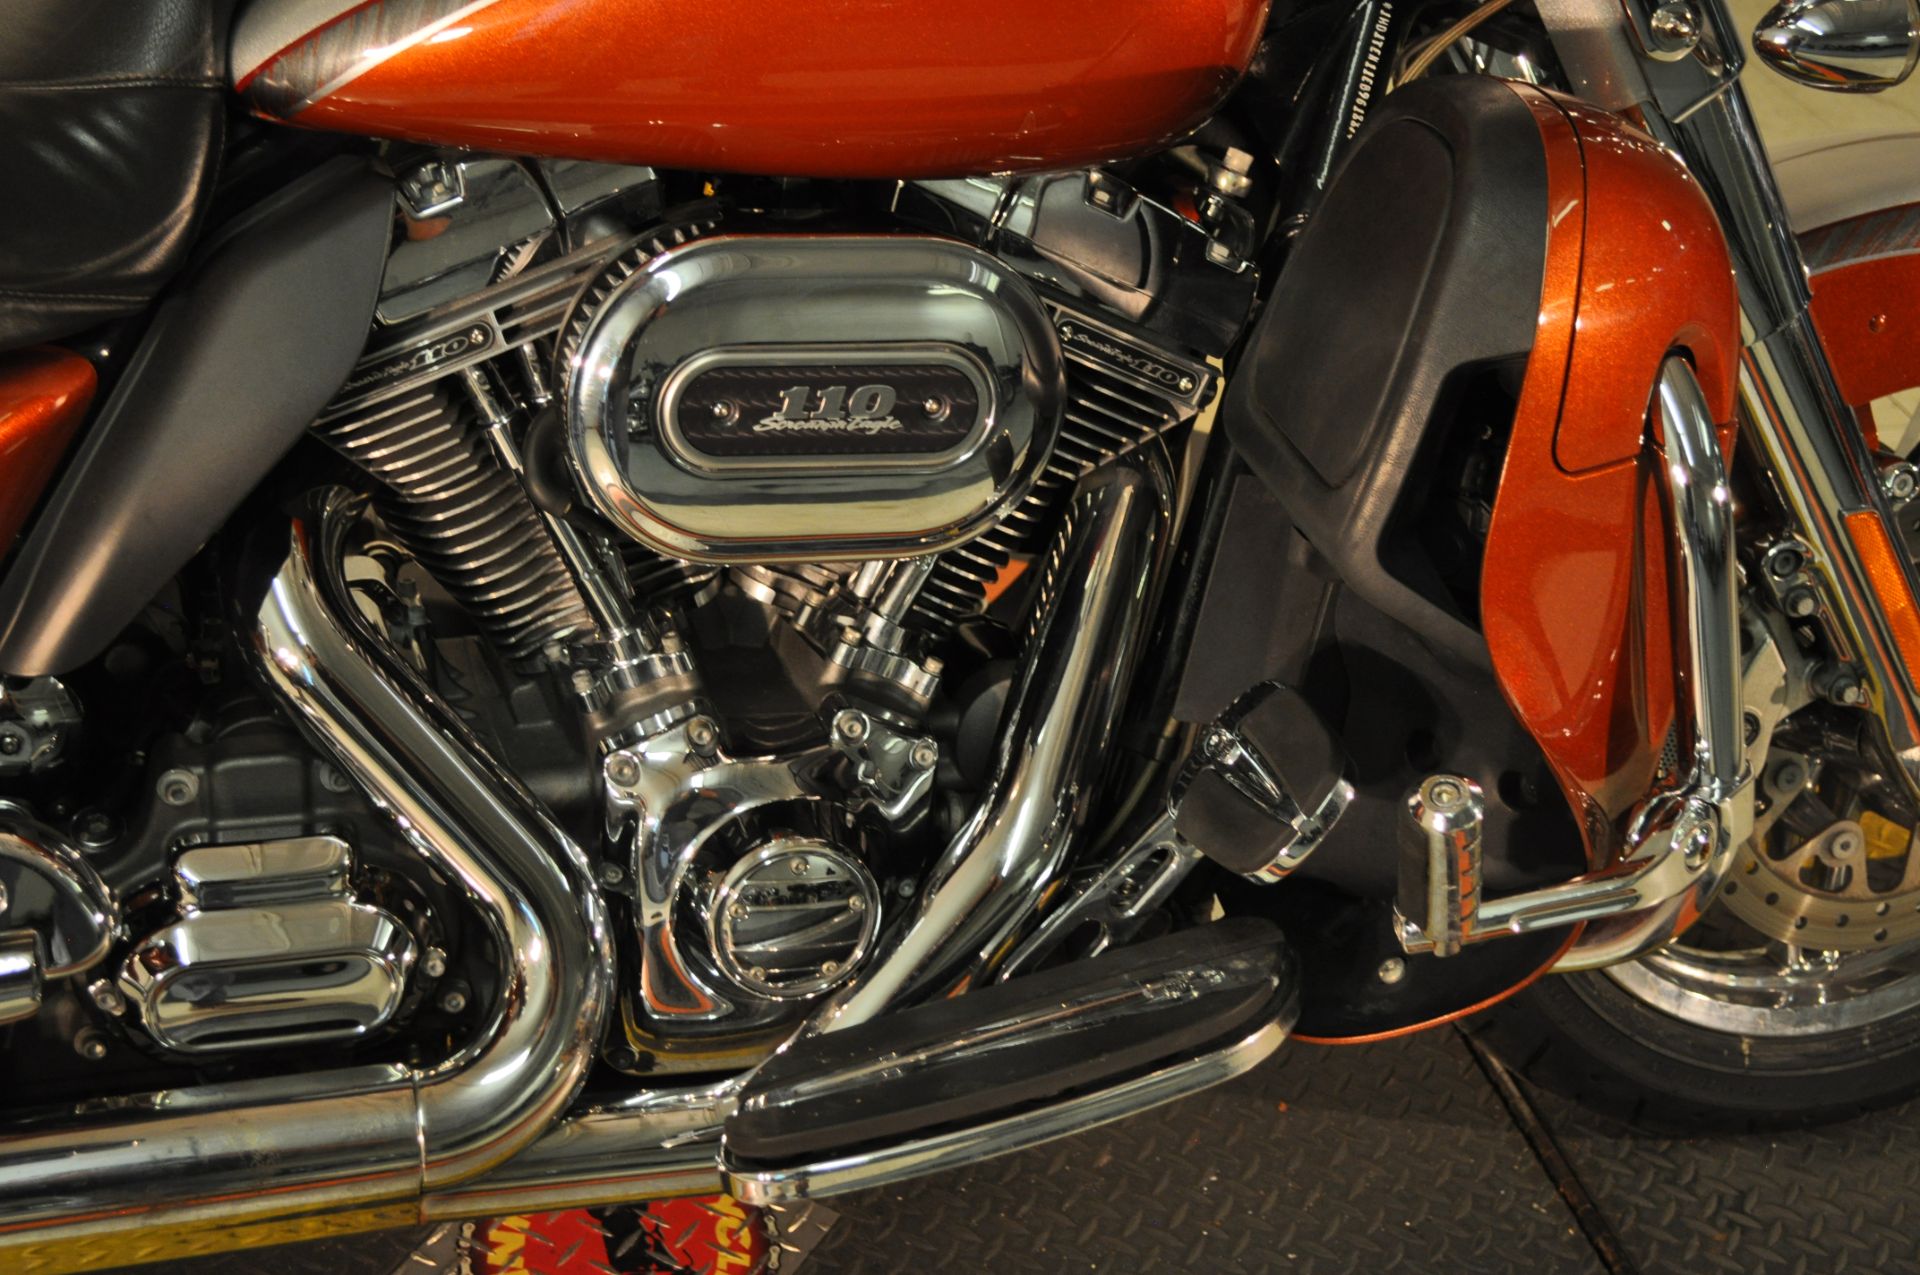 2014 Harley-Davidson CVO™ Limited in Winston Salem, North Carolina - Photo 7